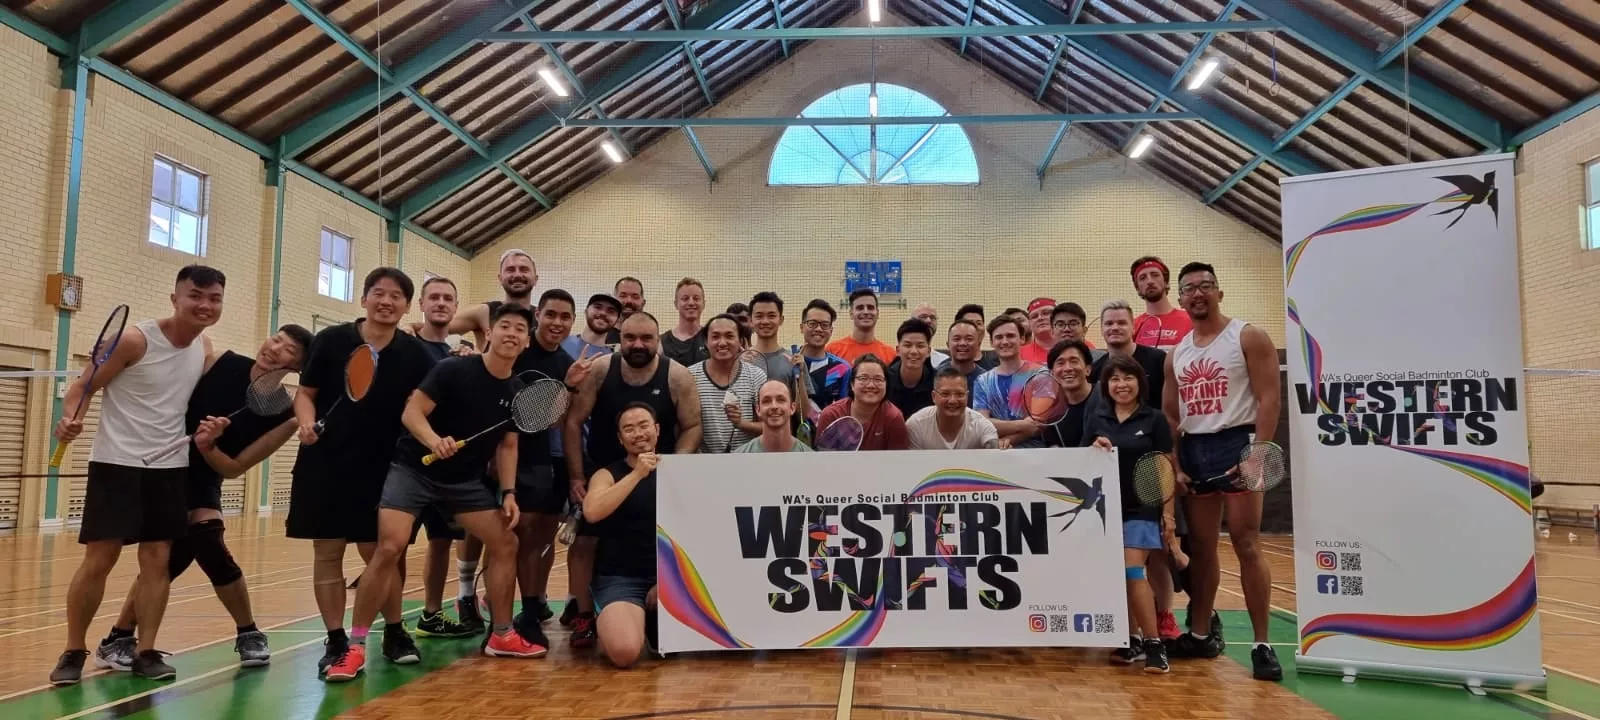 Western Swifts Gay Badminton Club - The Badminton Hub